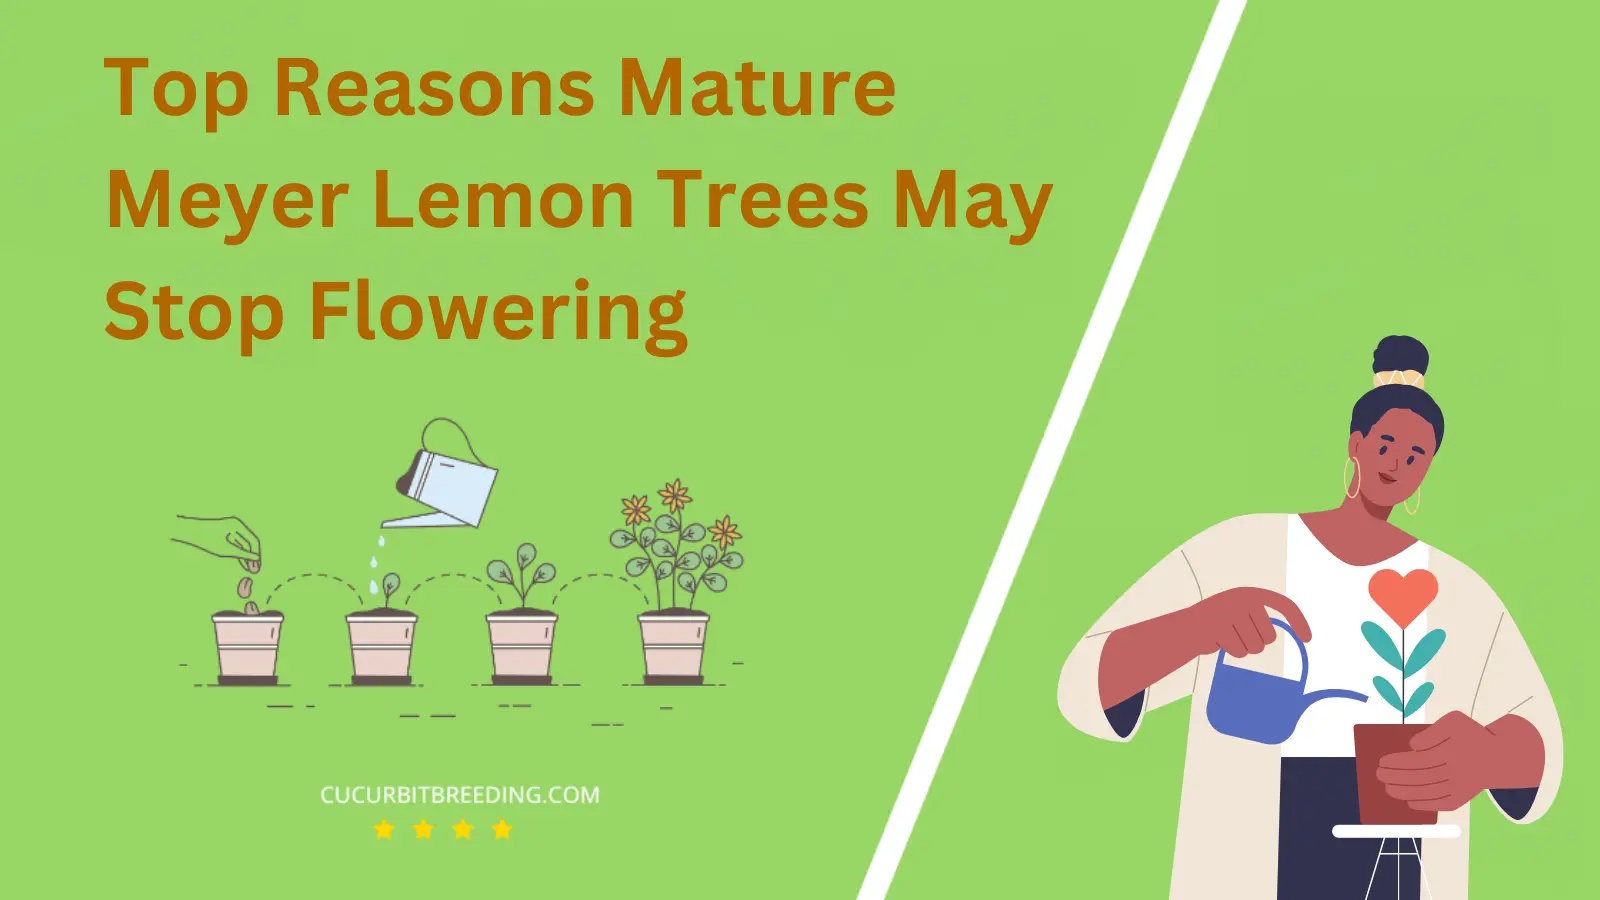 Top Reasons Mature Meyer Lemon Trees May Stop Flowering